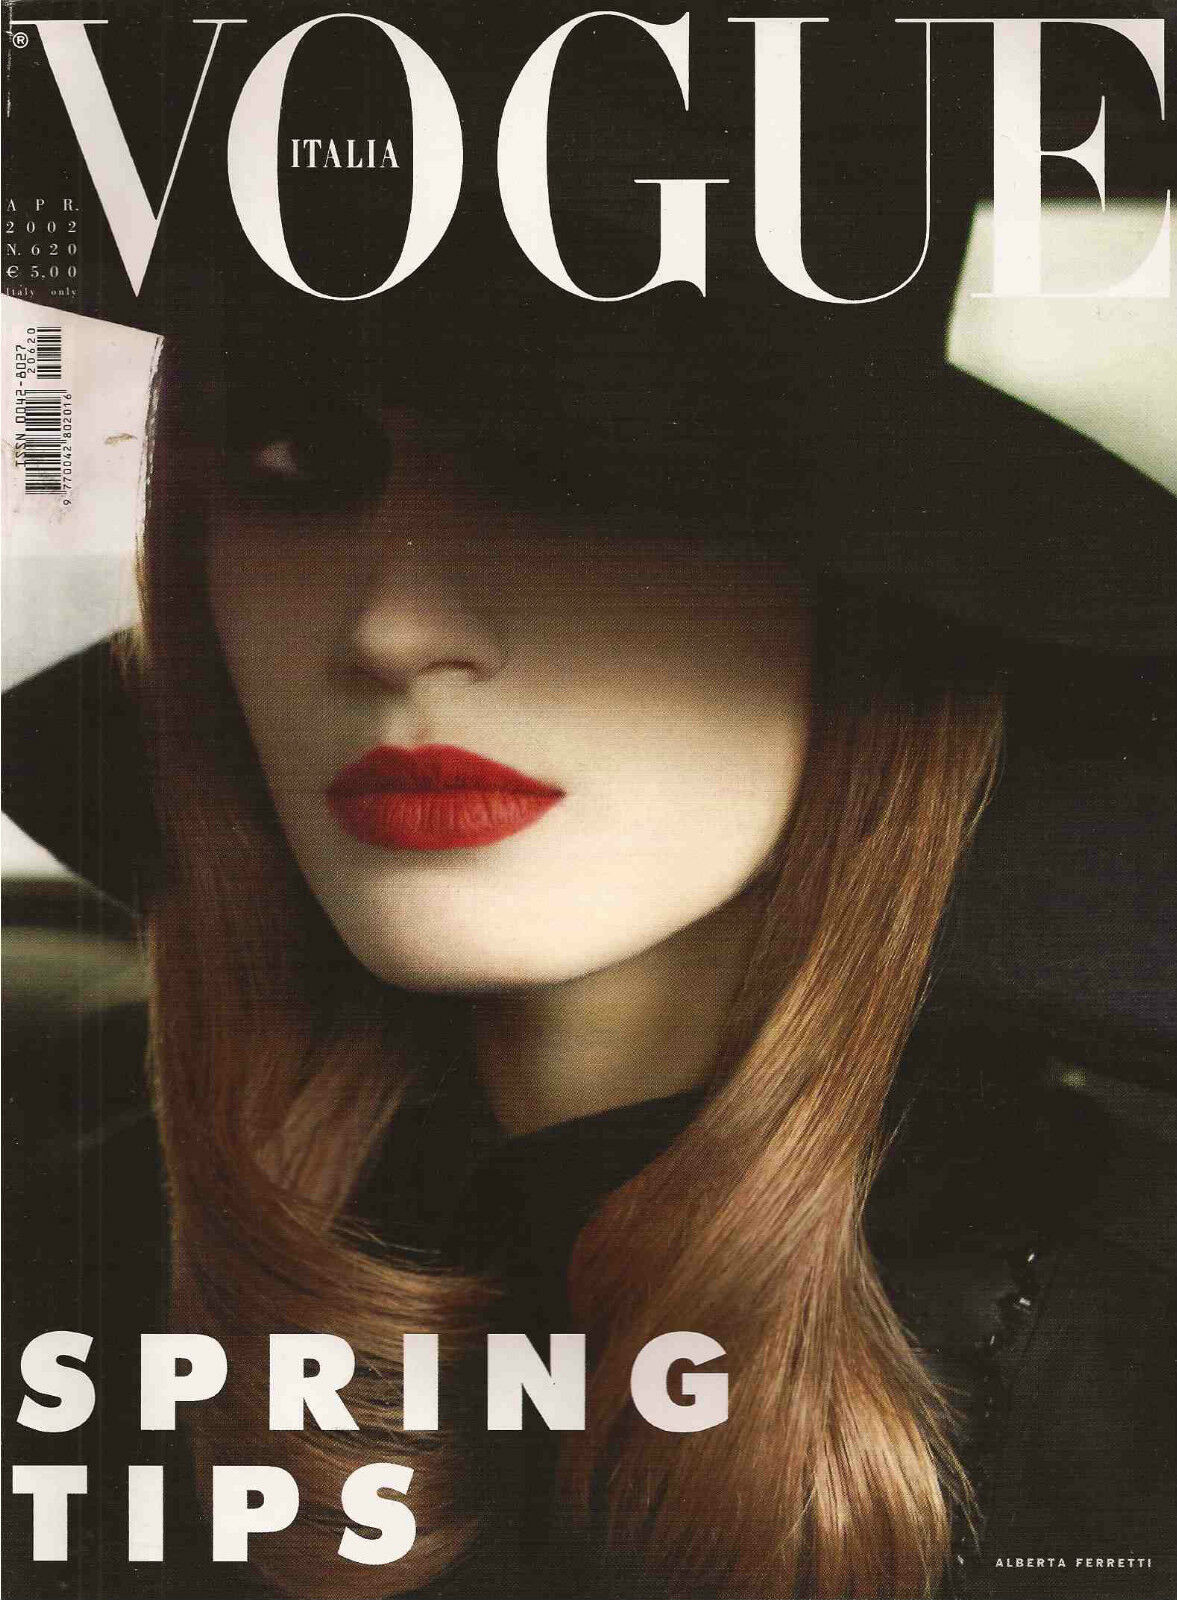 Vogue Italia April 2002 - Steven Meisel - Inez Van Lamsweerde - Steven Klein